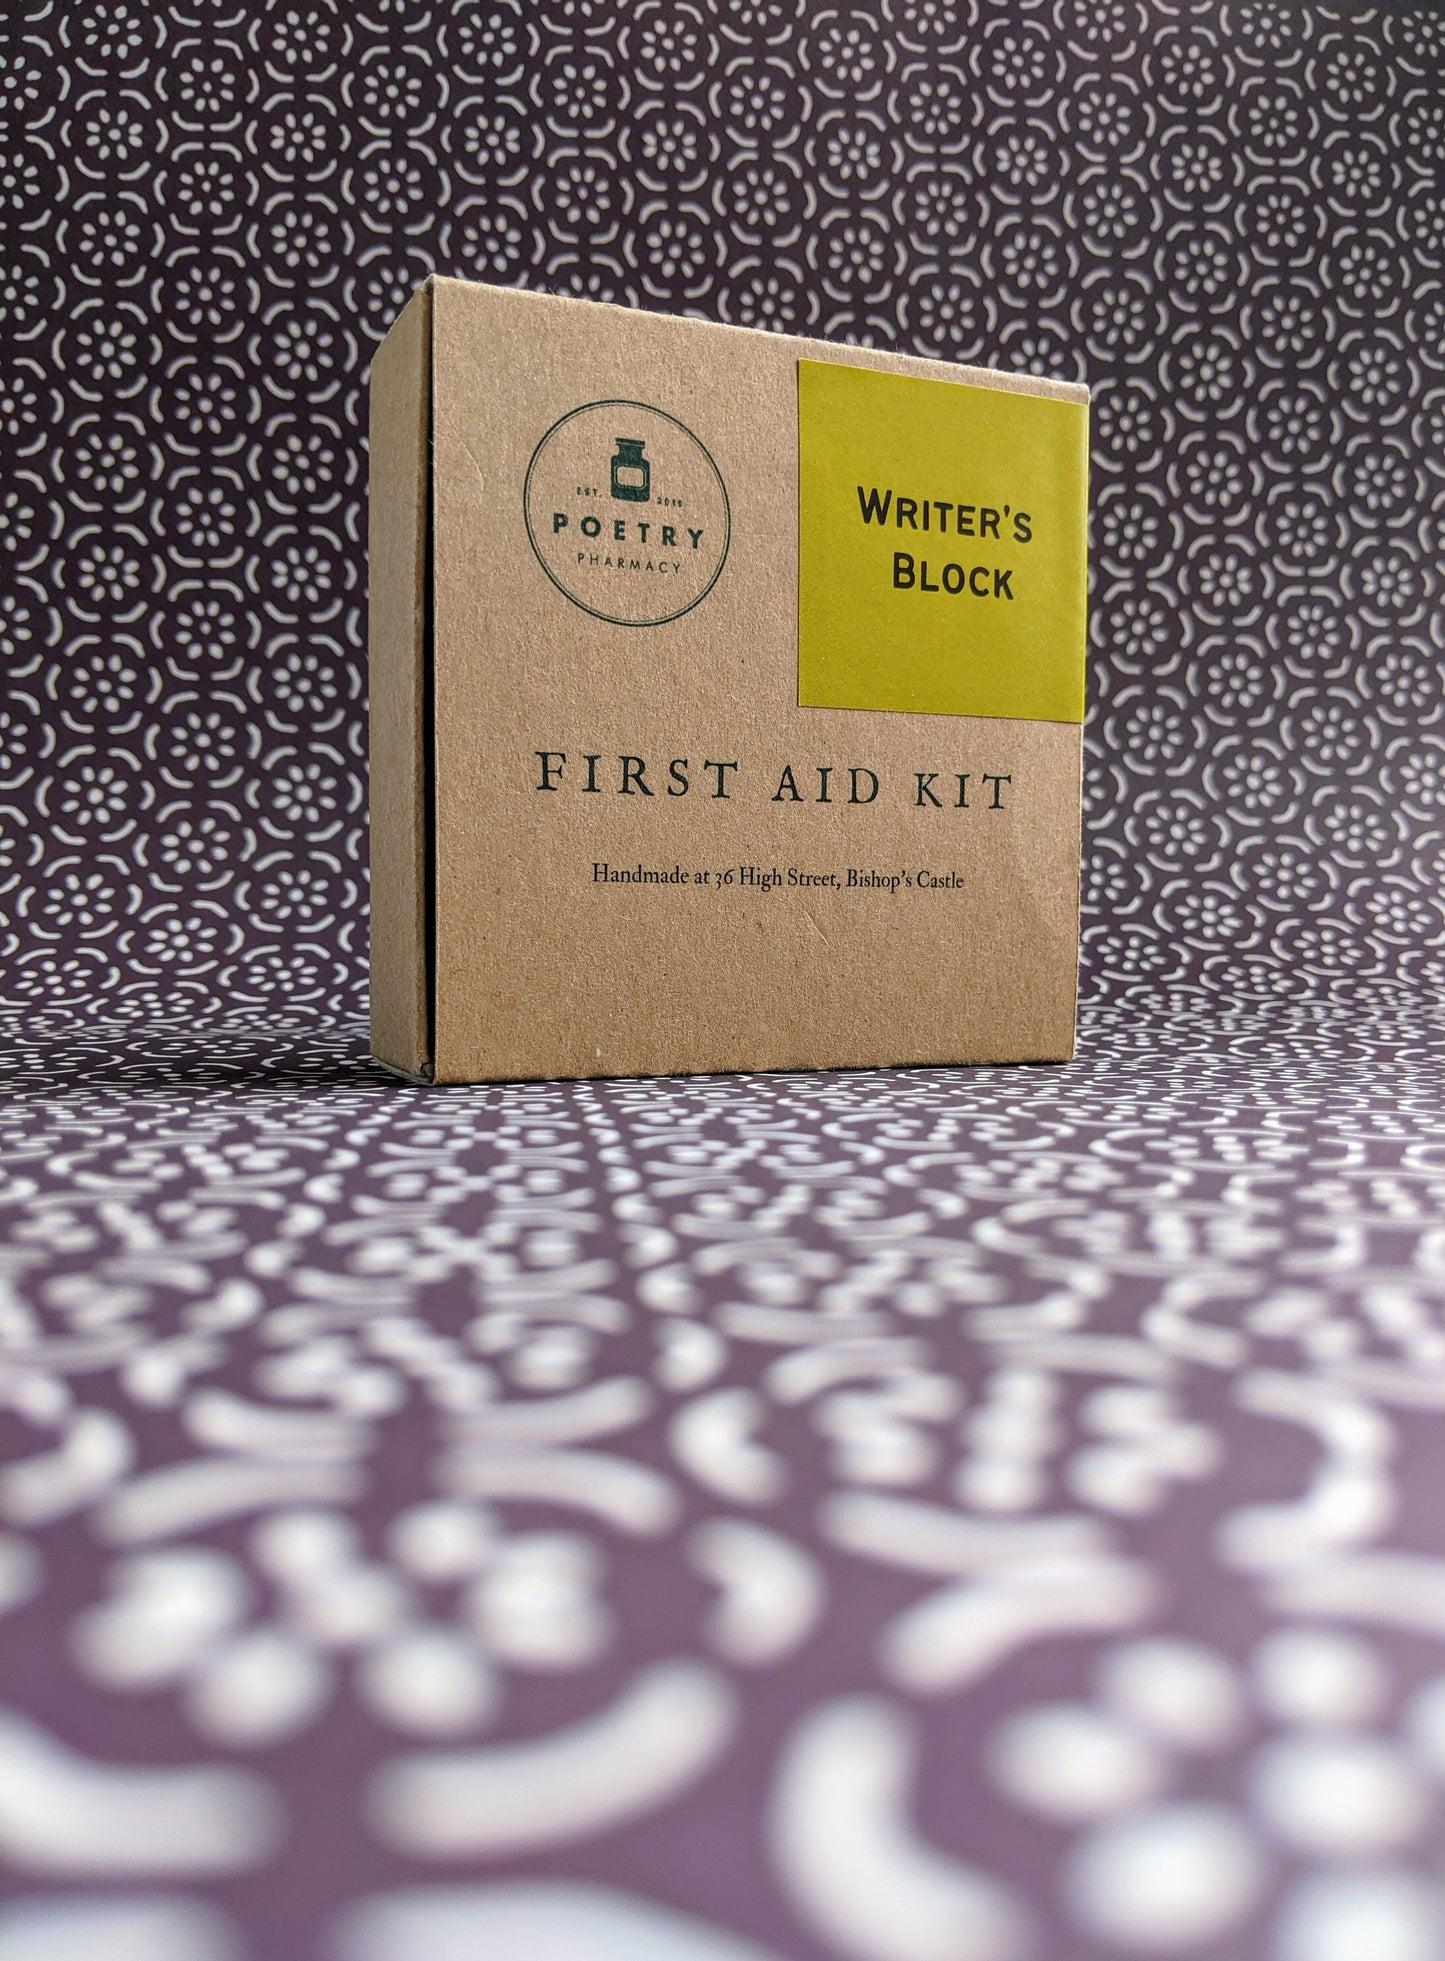 First Aid Kit - Writer's Block